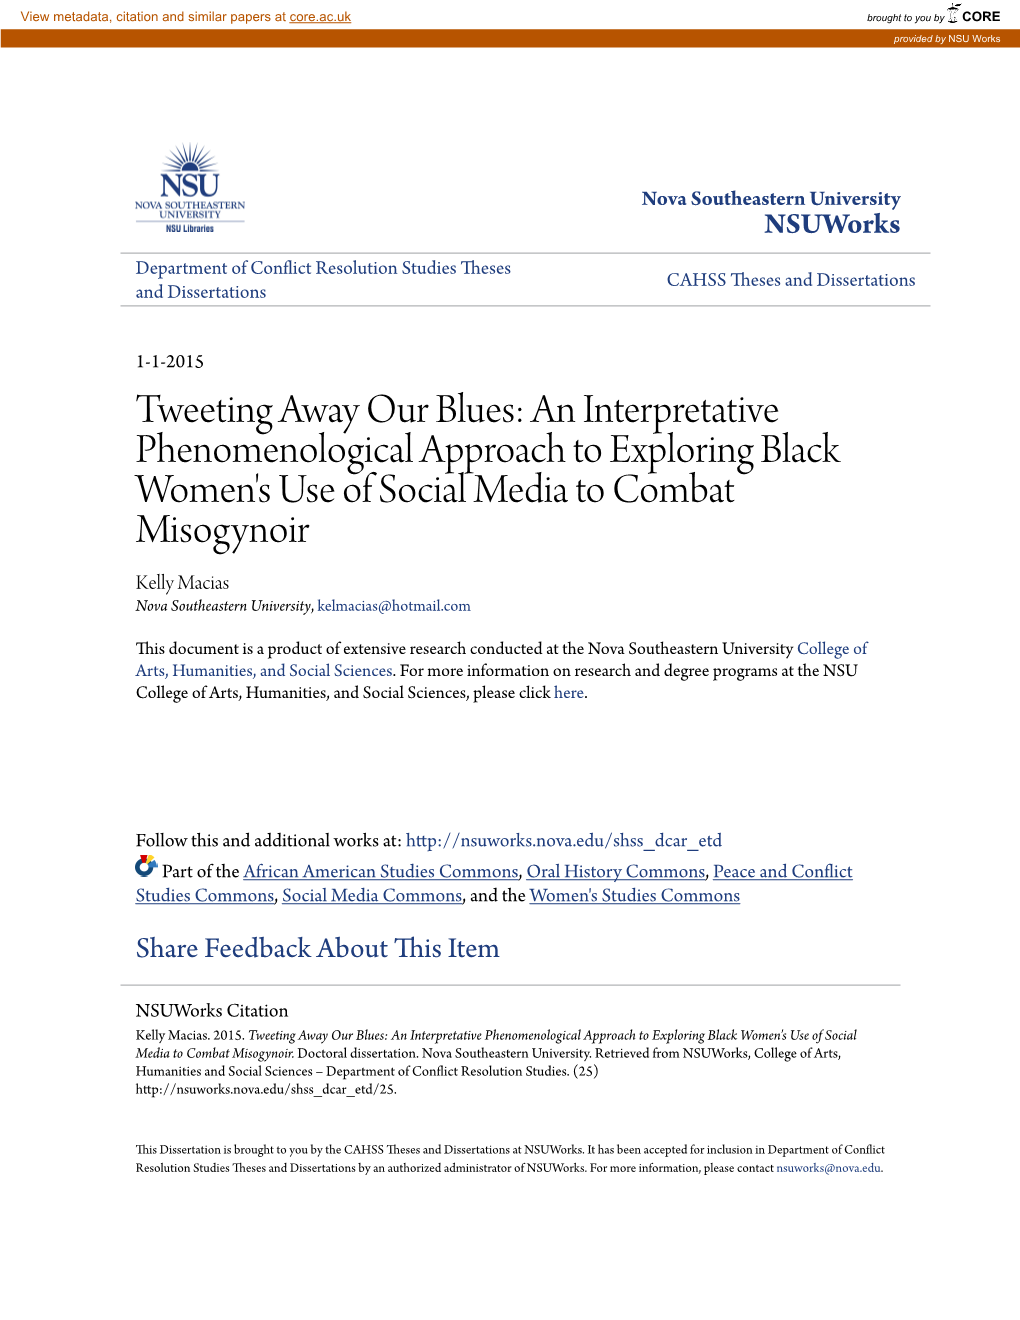 An Interpretative Phenomenological Approach to Exploring Black Women's Use of Social Media to Comba